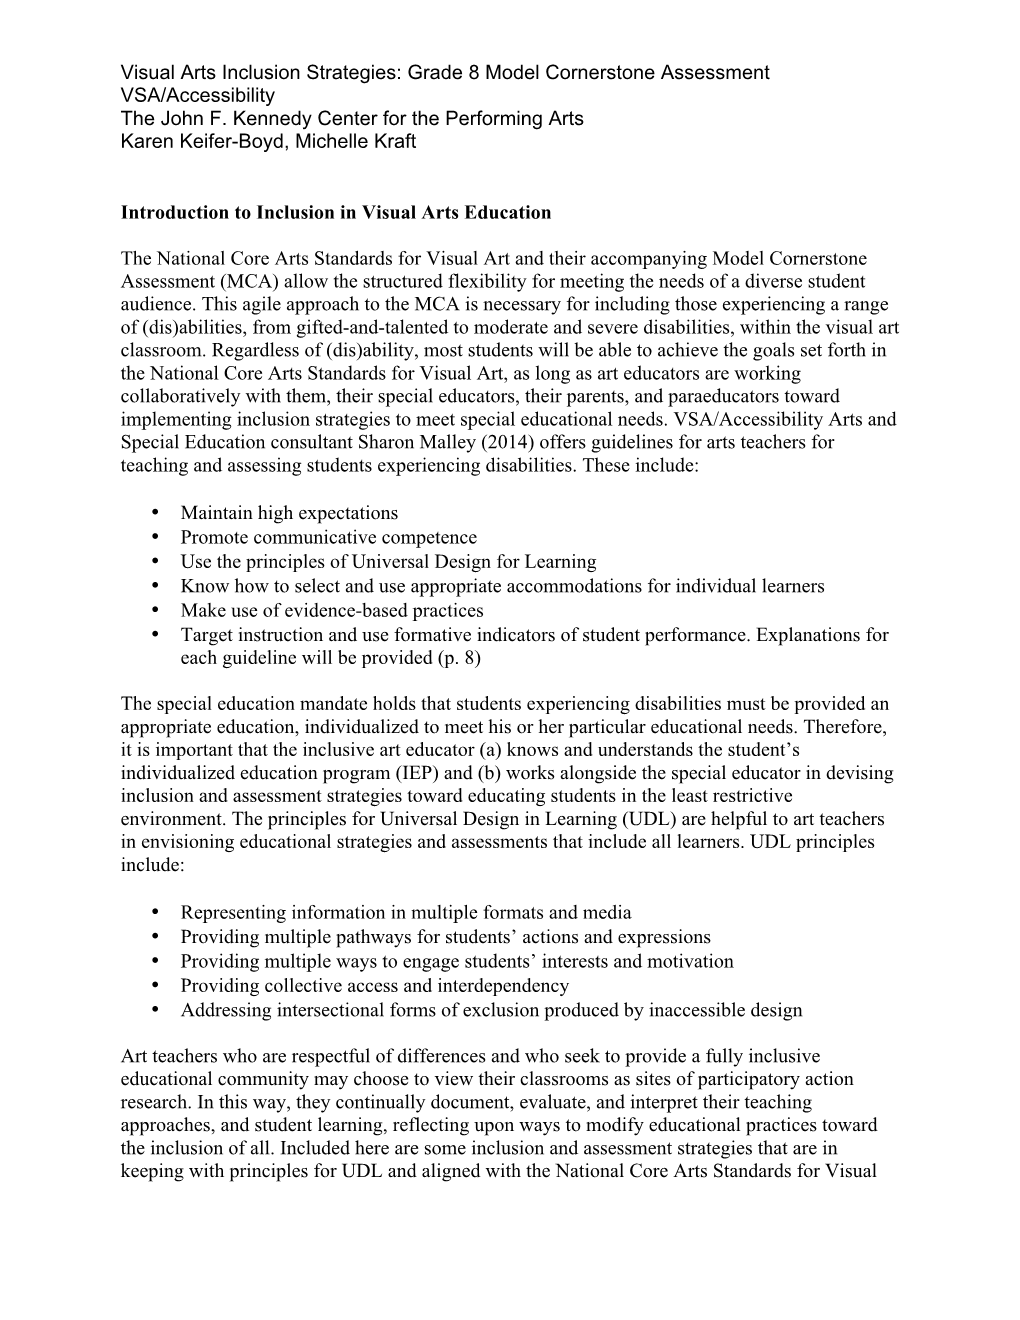 Visual Arts Inclusion Strategies: Grade 8 Model Cornerstone Assessment VSA/Accessibility the John F